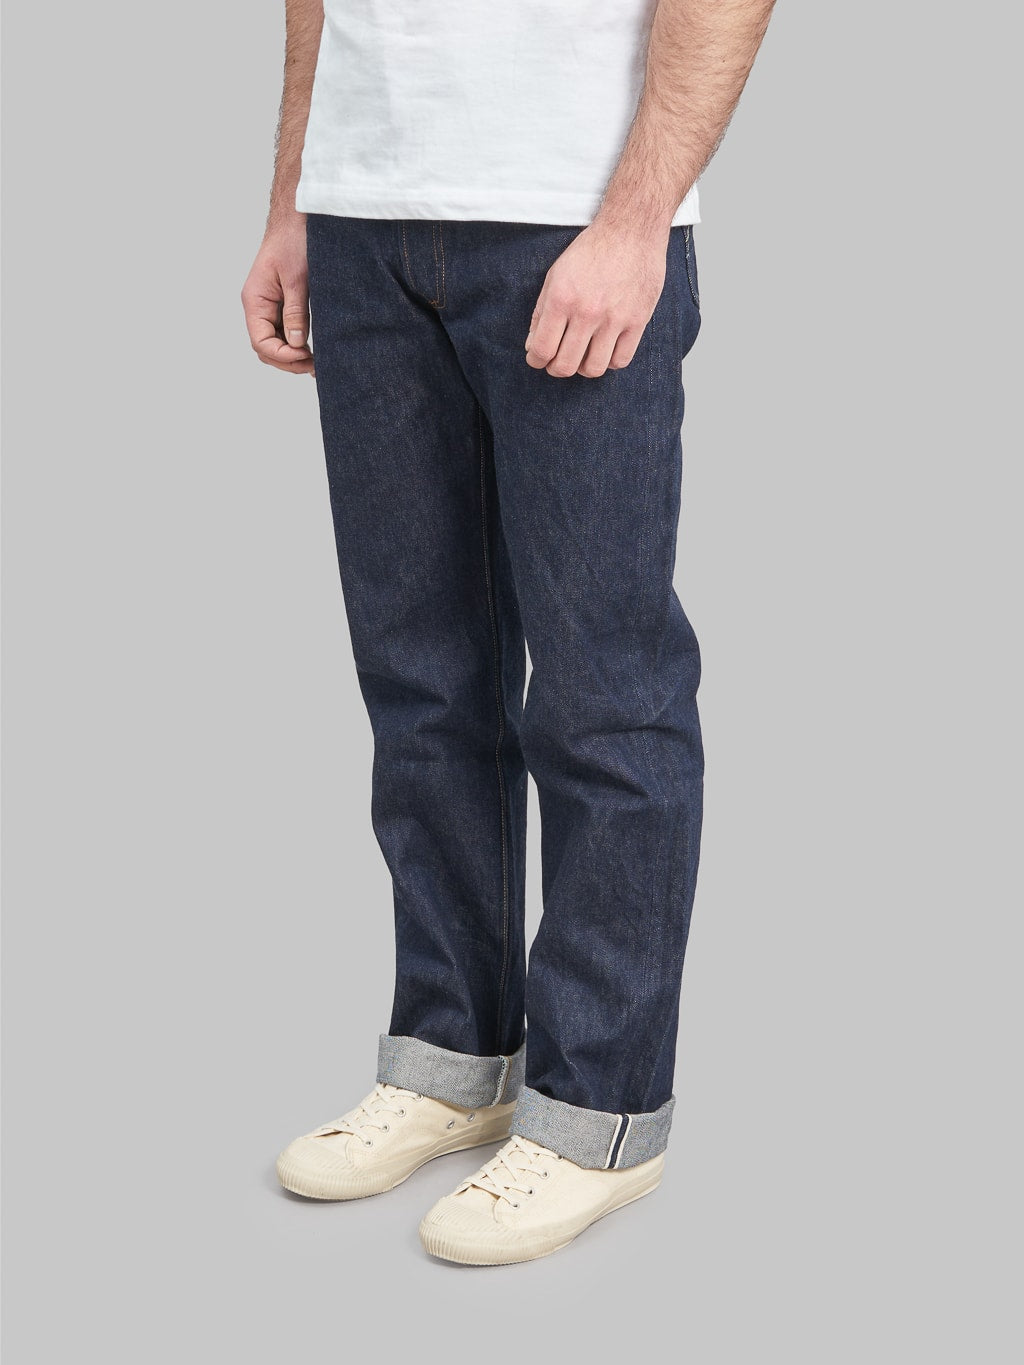 Studio D'Artisan SD-801 15oz Natural Indigo Regular Straight Jeans